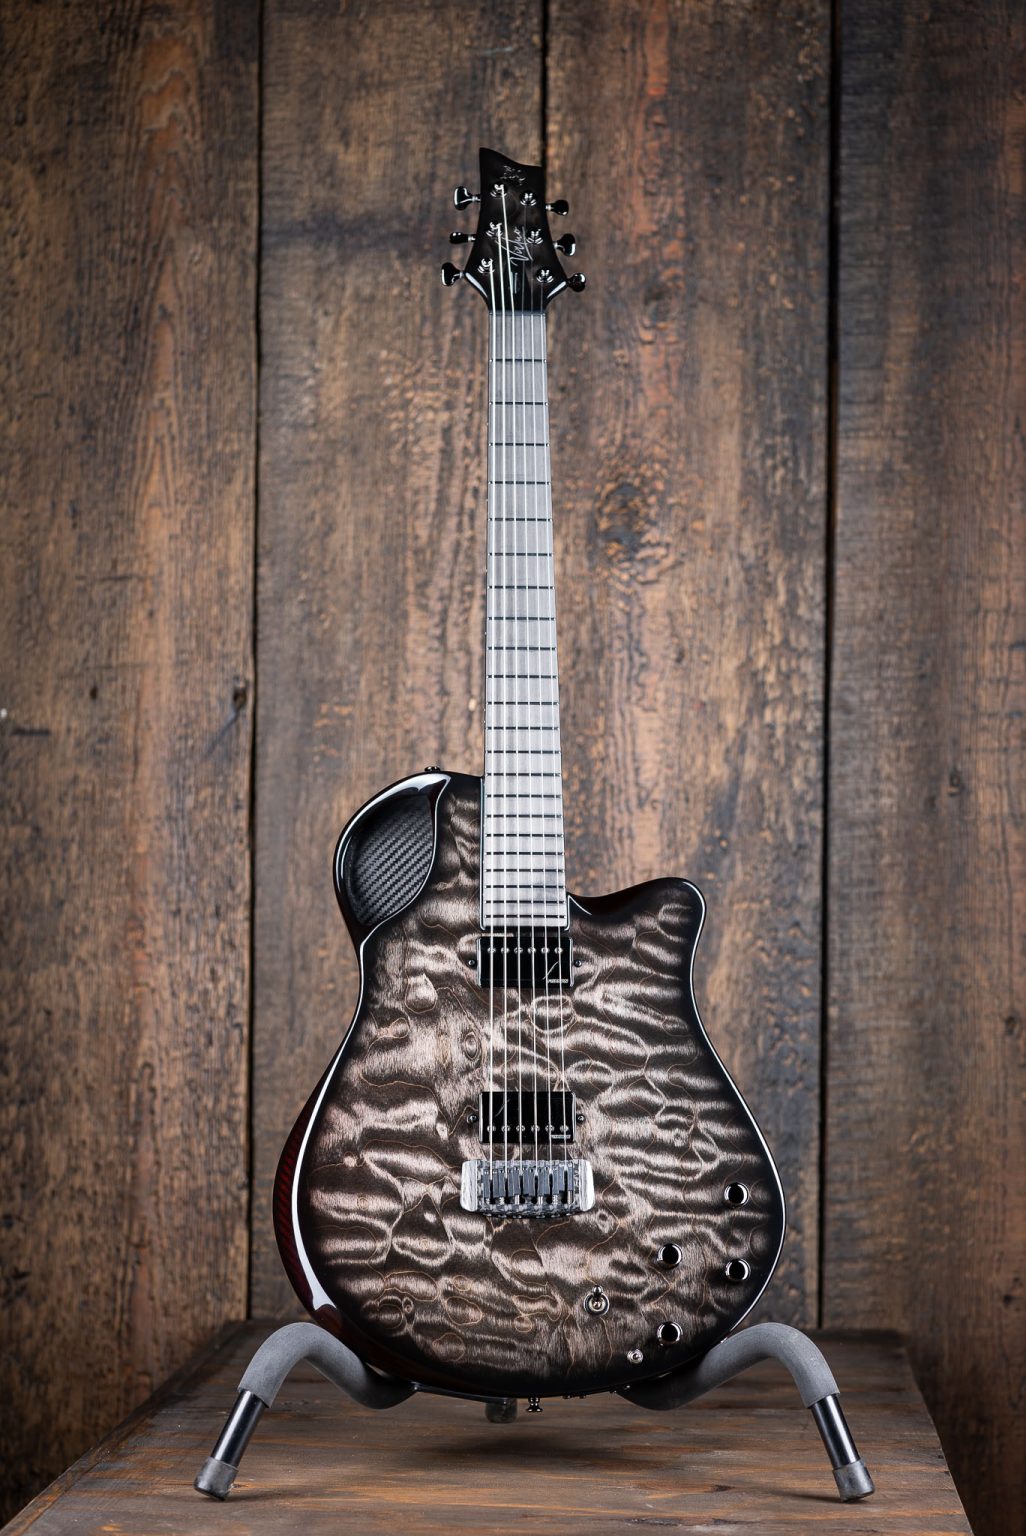 Emerald Virtuo guitar in unique black marbled carbon fiber finish